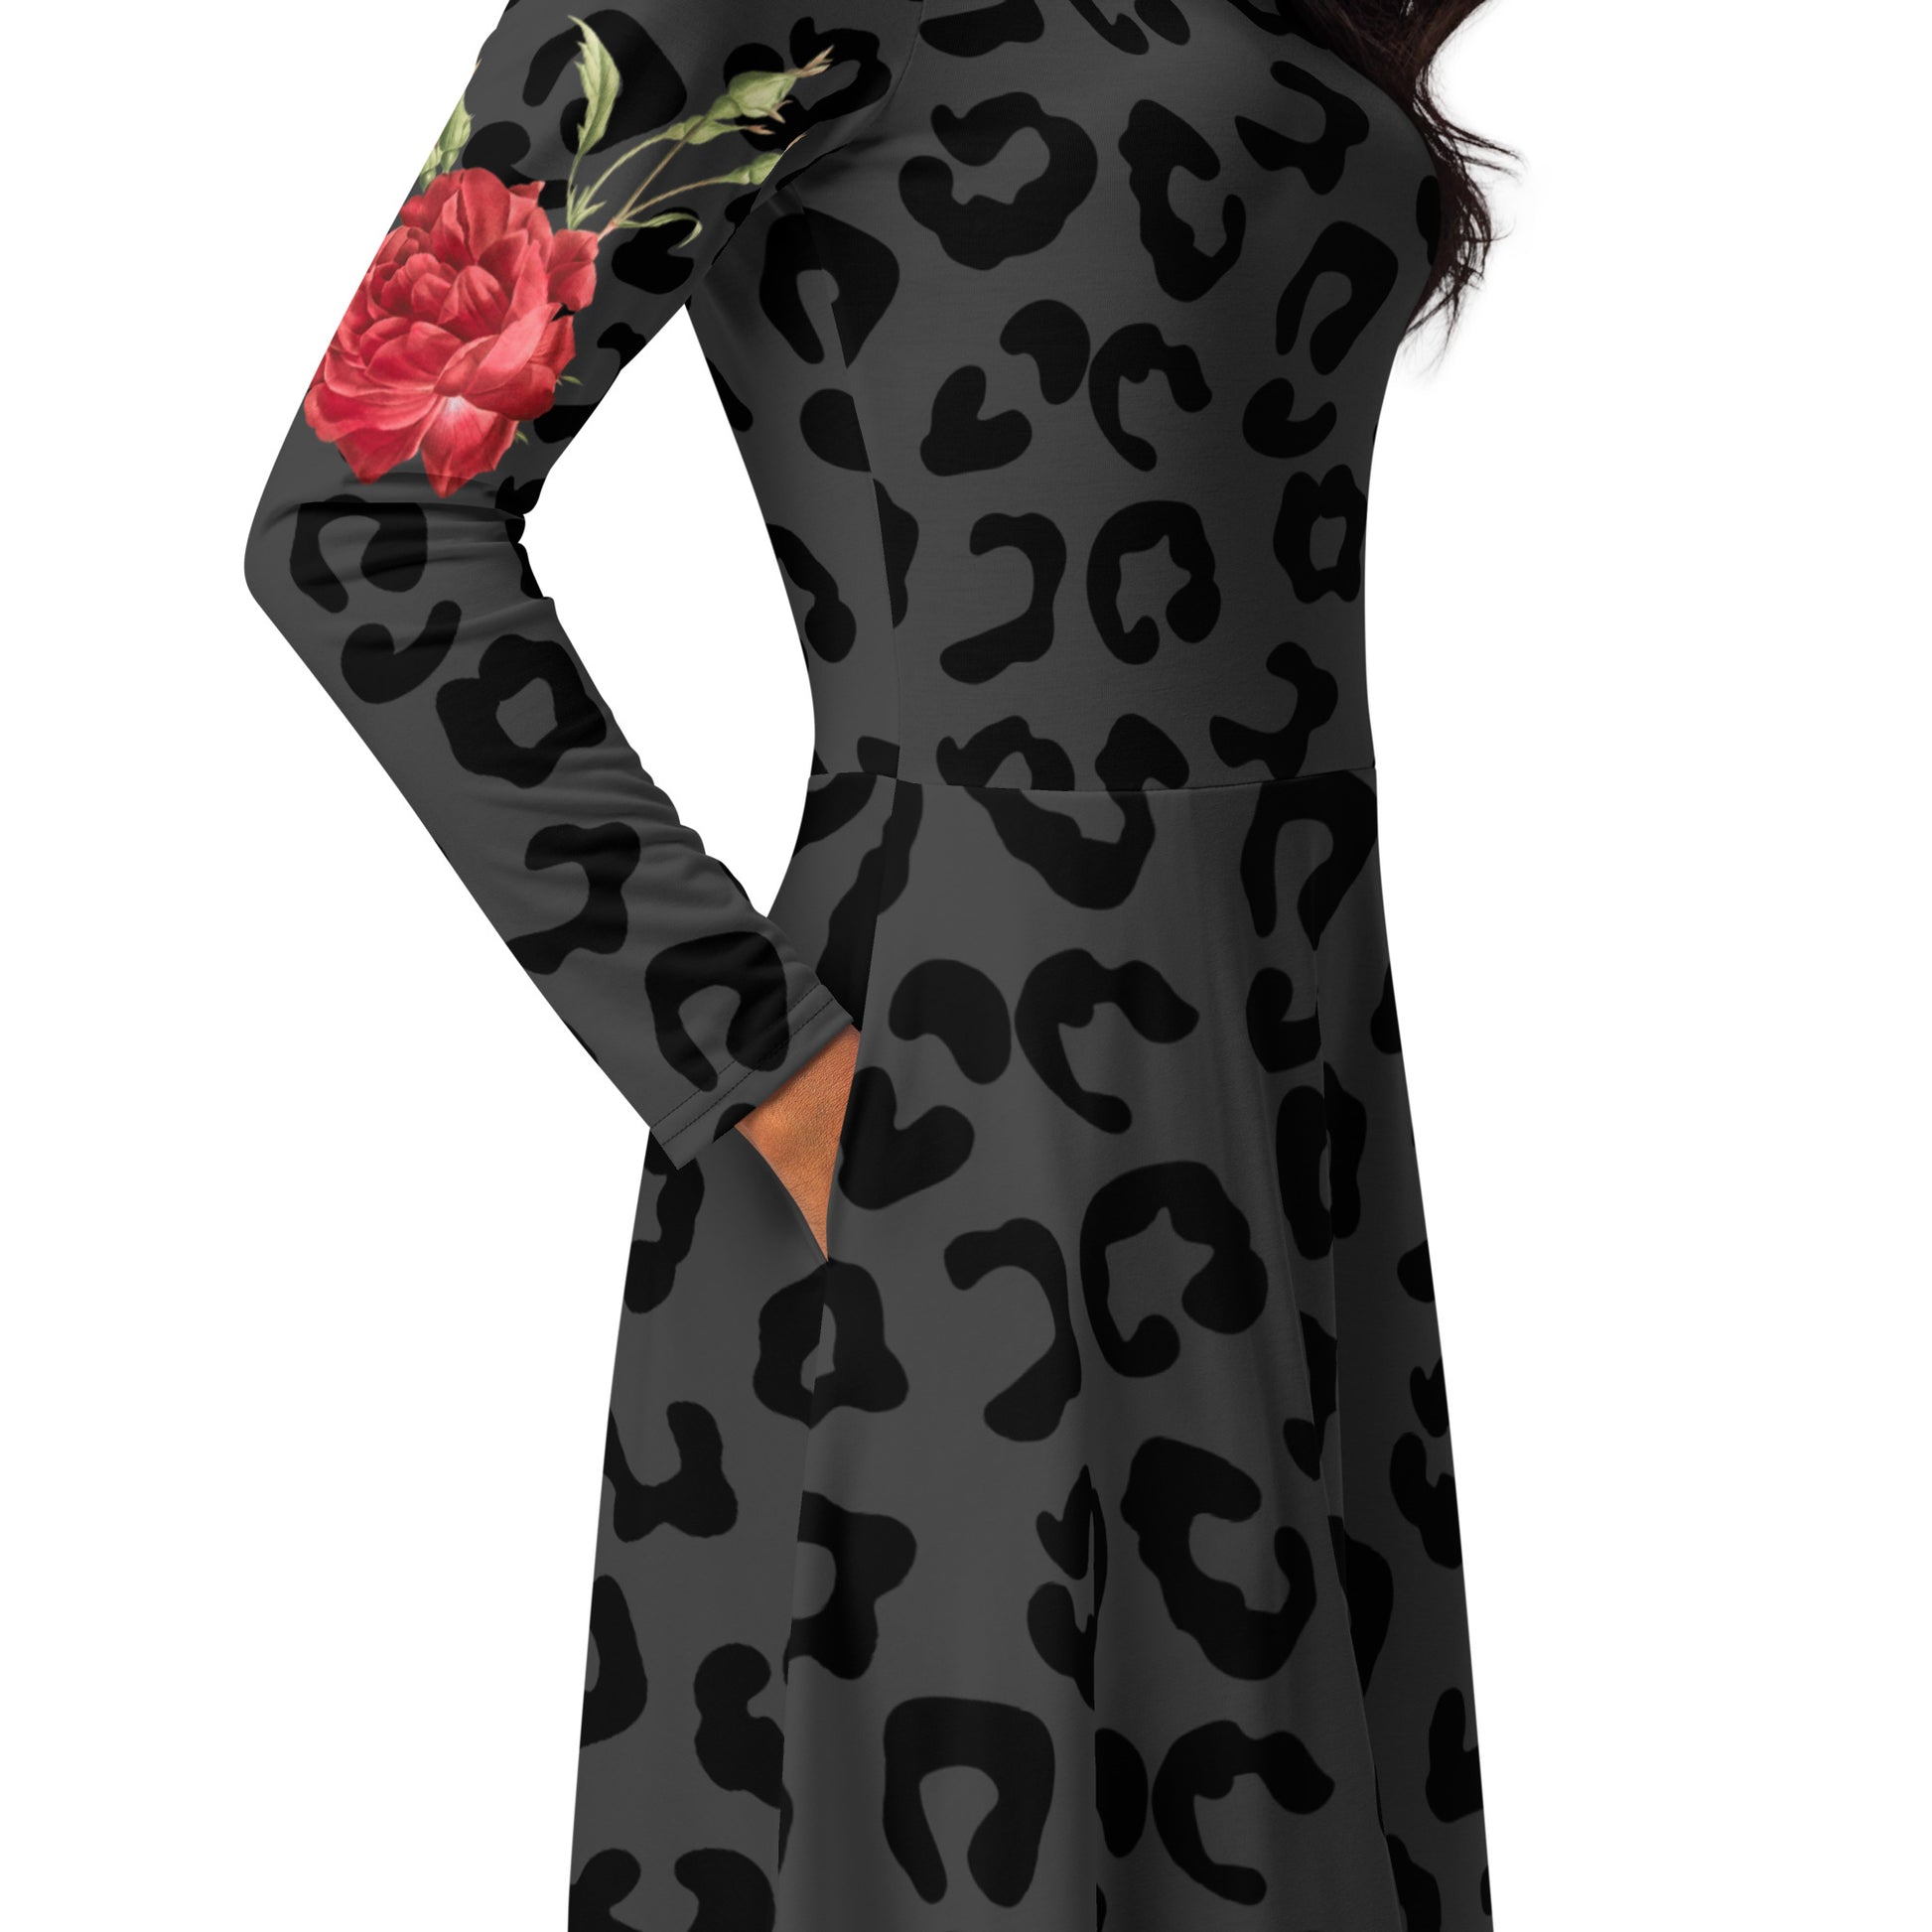 Gray & Black Cheetah with rose detail-long sleeve midi dress - DMD Bags